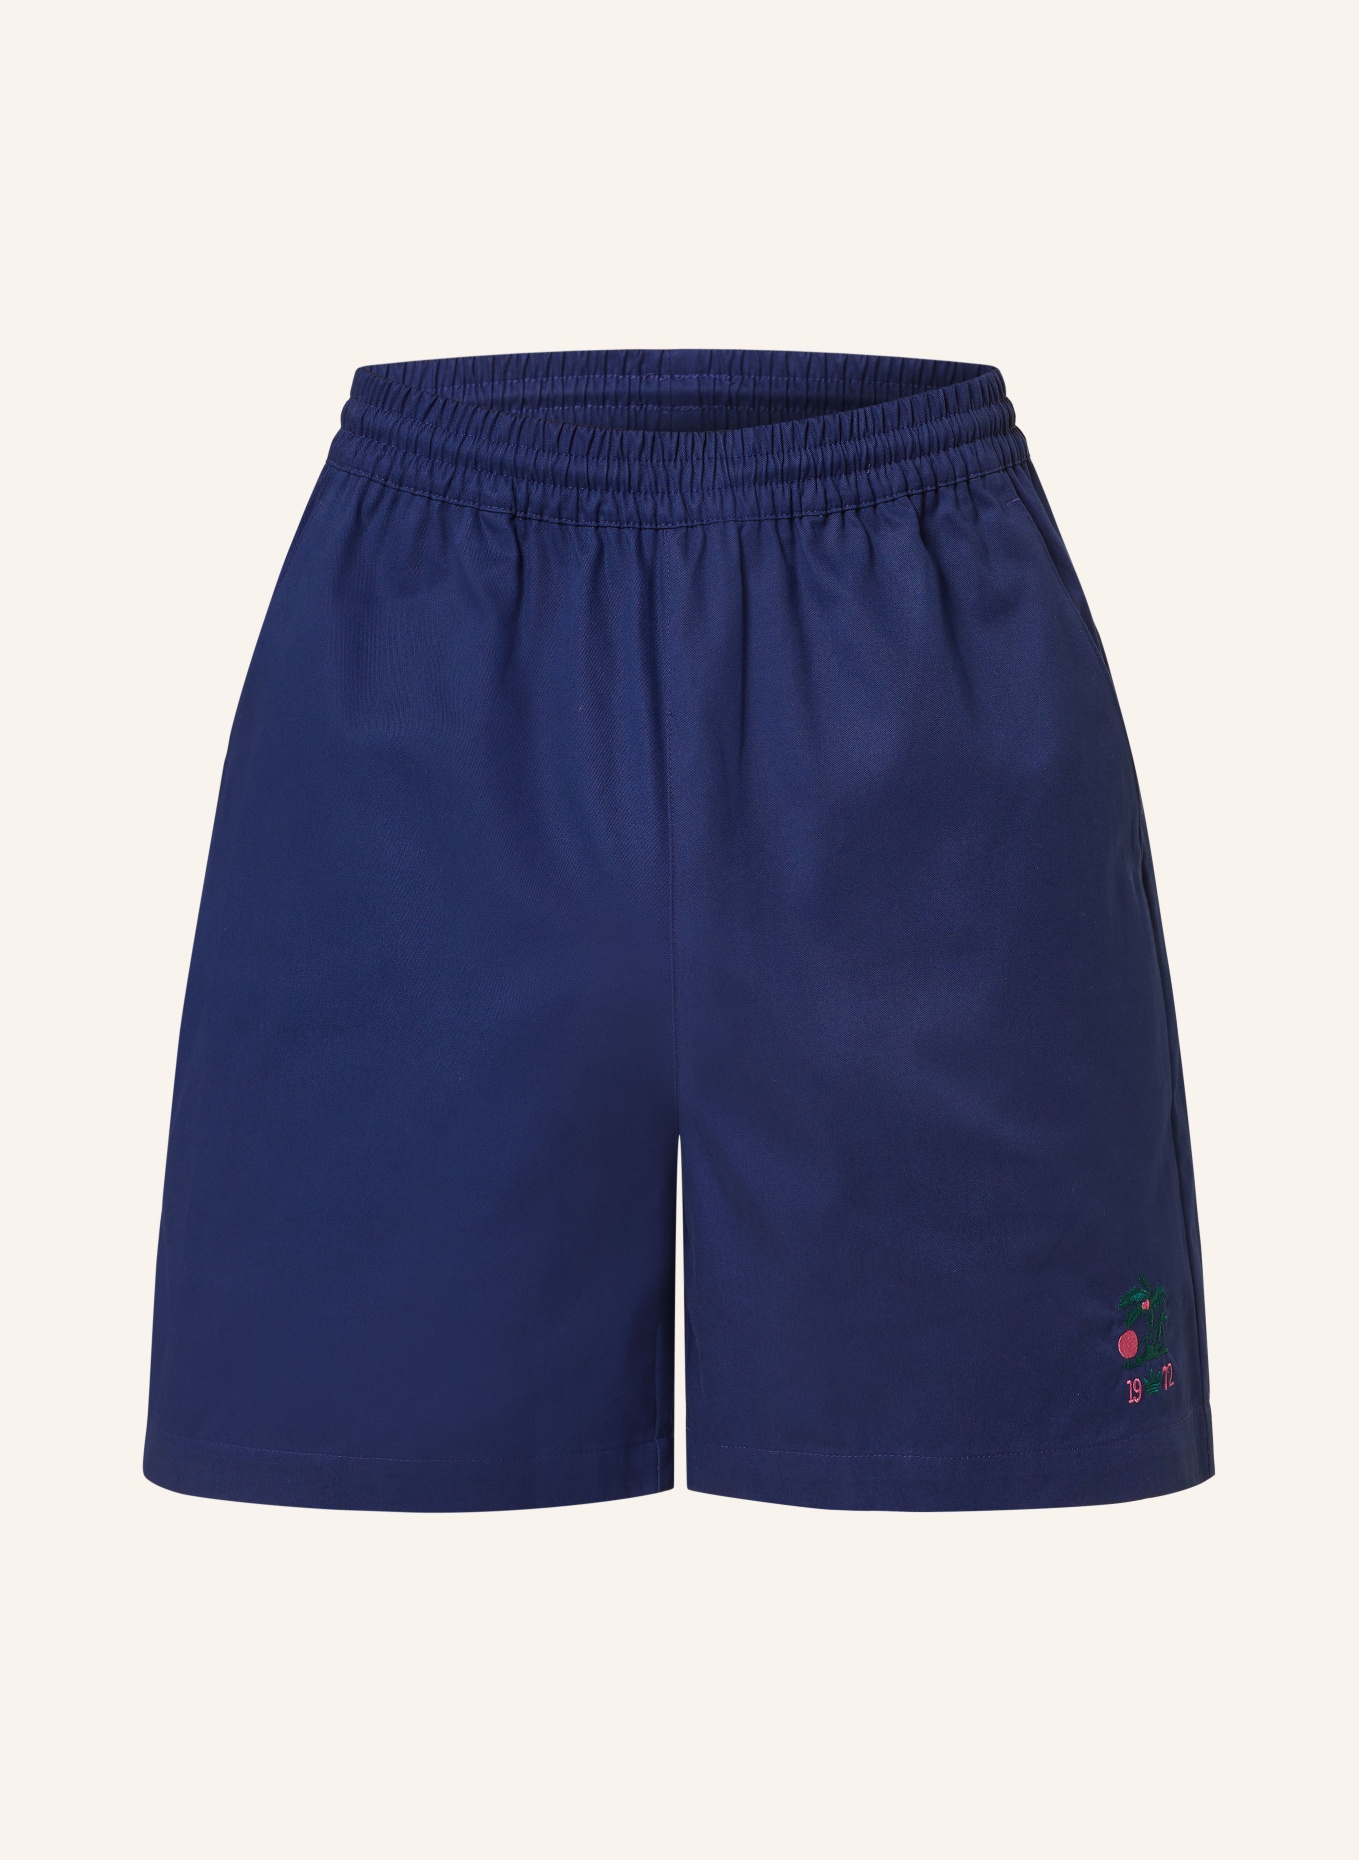 adidas Originals Shorts ORIGINALS LEISURE LEAGUE GROUNDSKEEPER, Farbe: DUNKELBLAU (Bild 1)